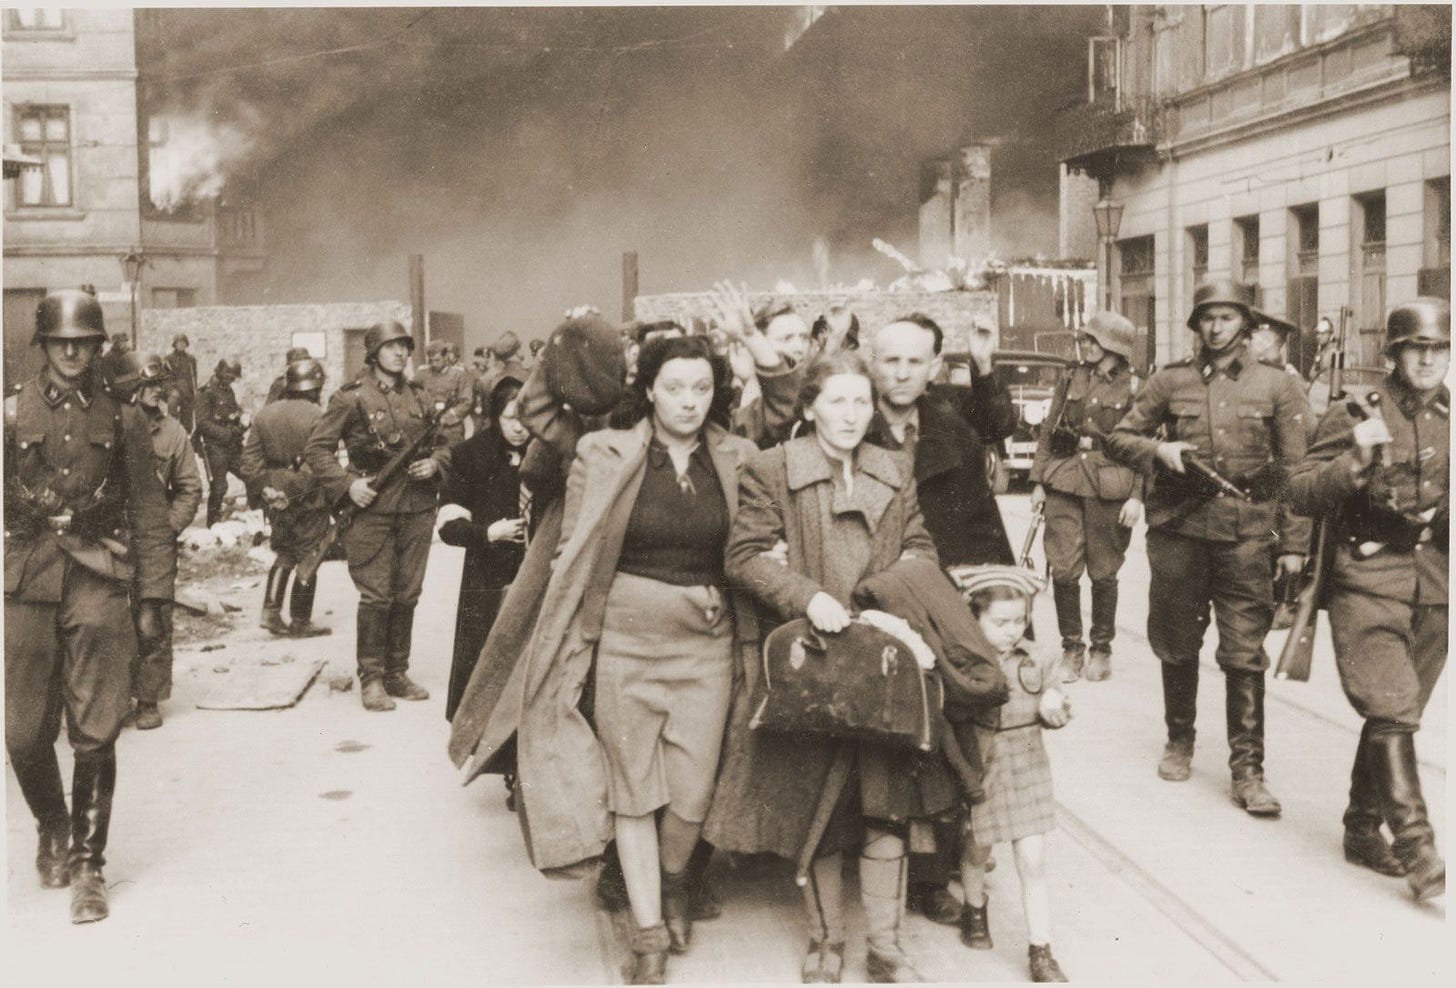 Warsaw Ghetto Uprising | Definition, Facts, & History | Britannica